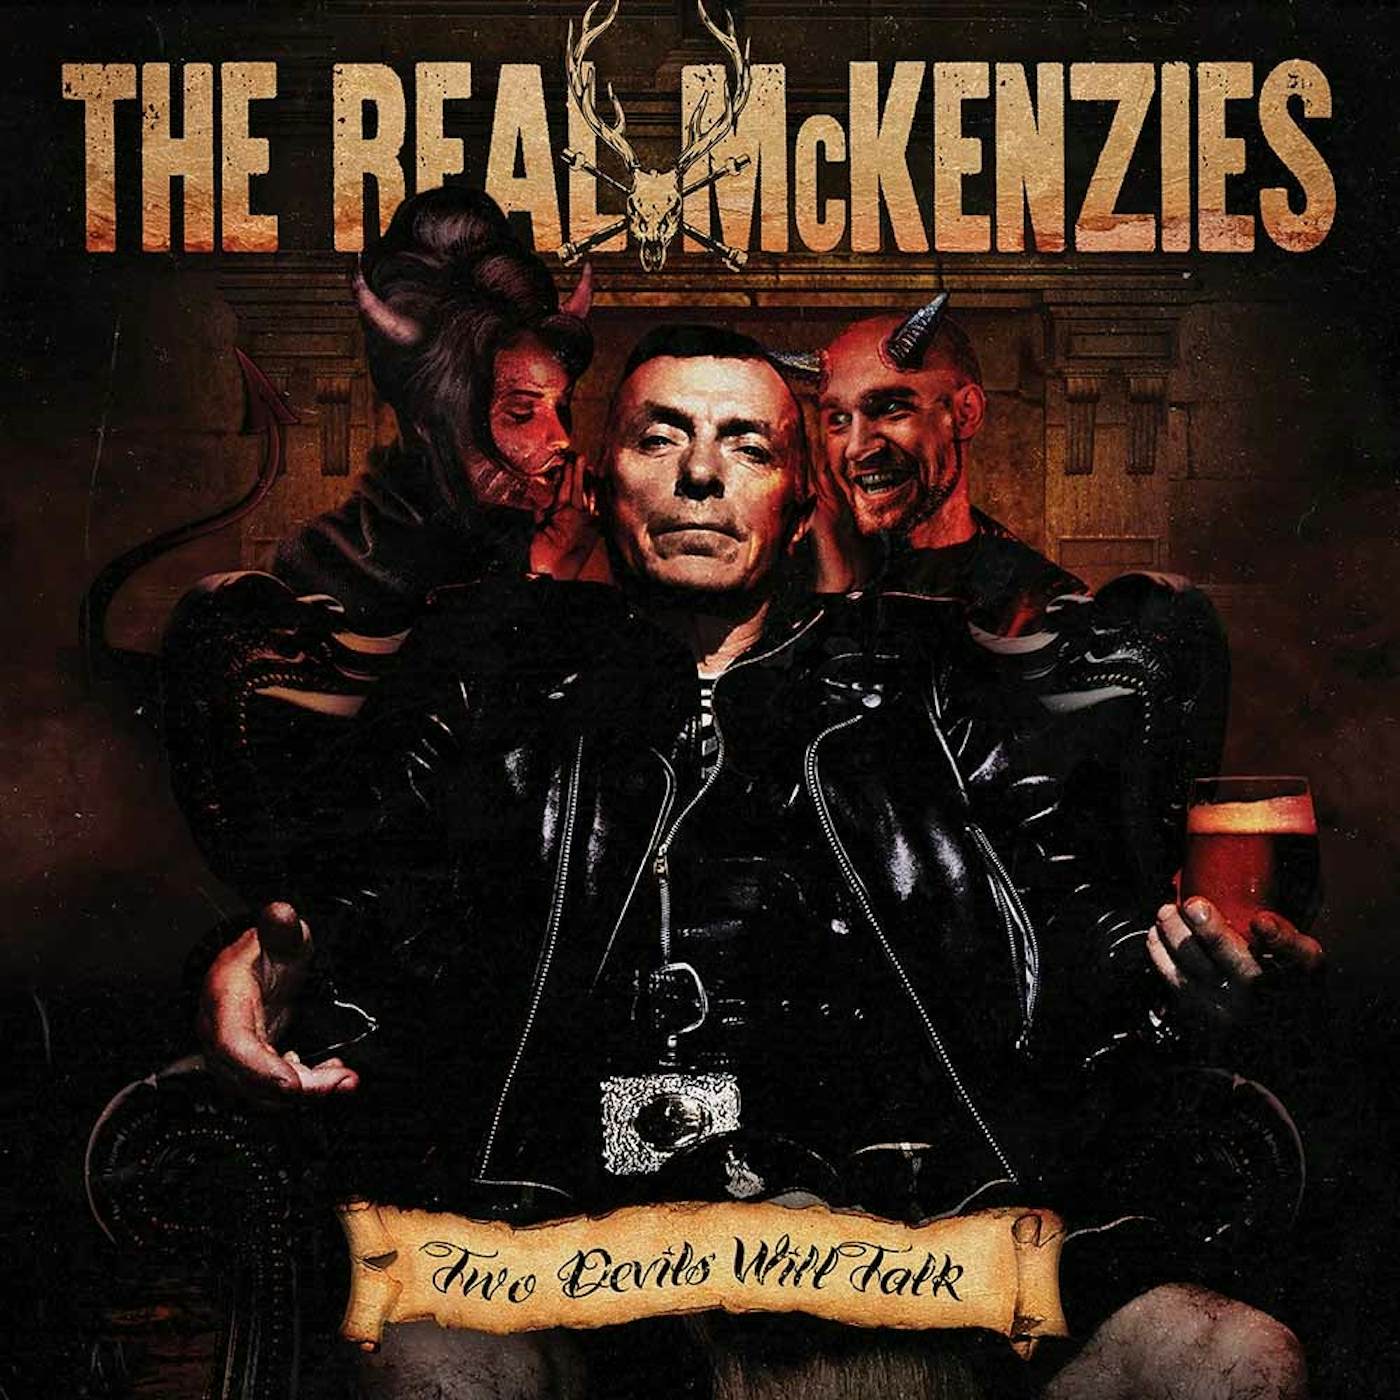 The Real Mckenzies LP - Two Devils Will Talk (Vinyl)